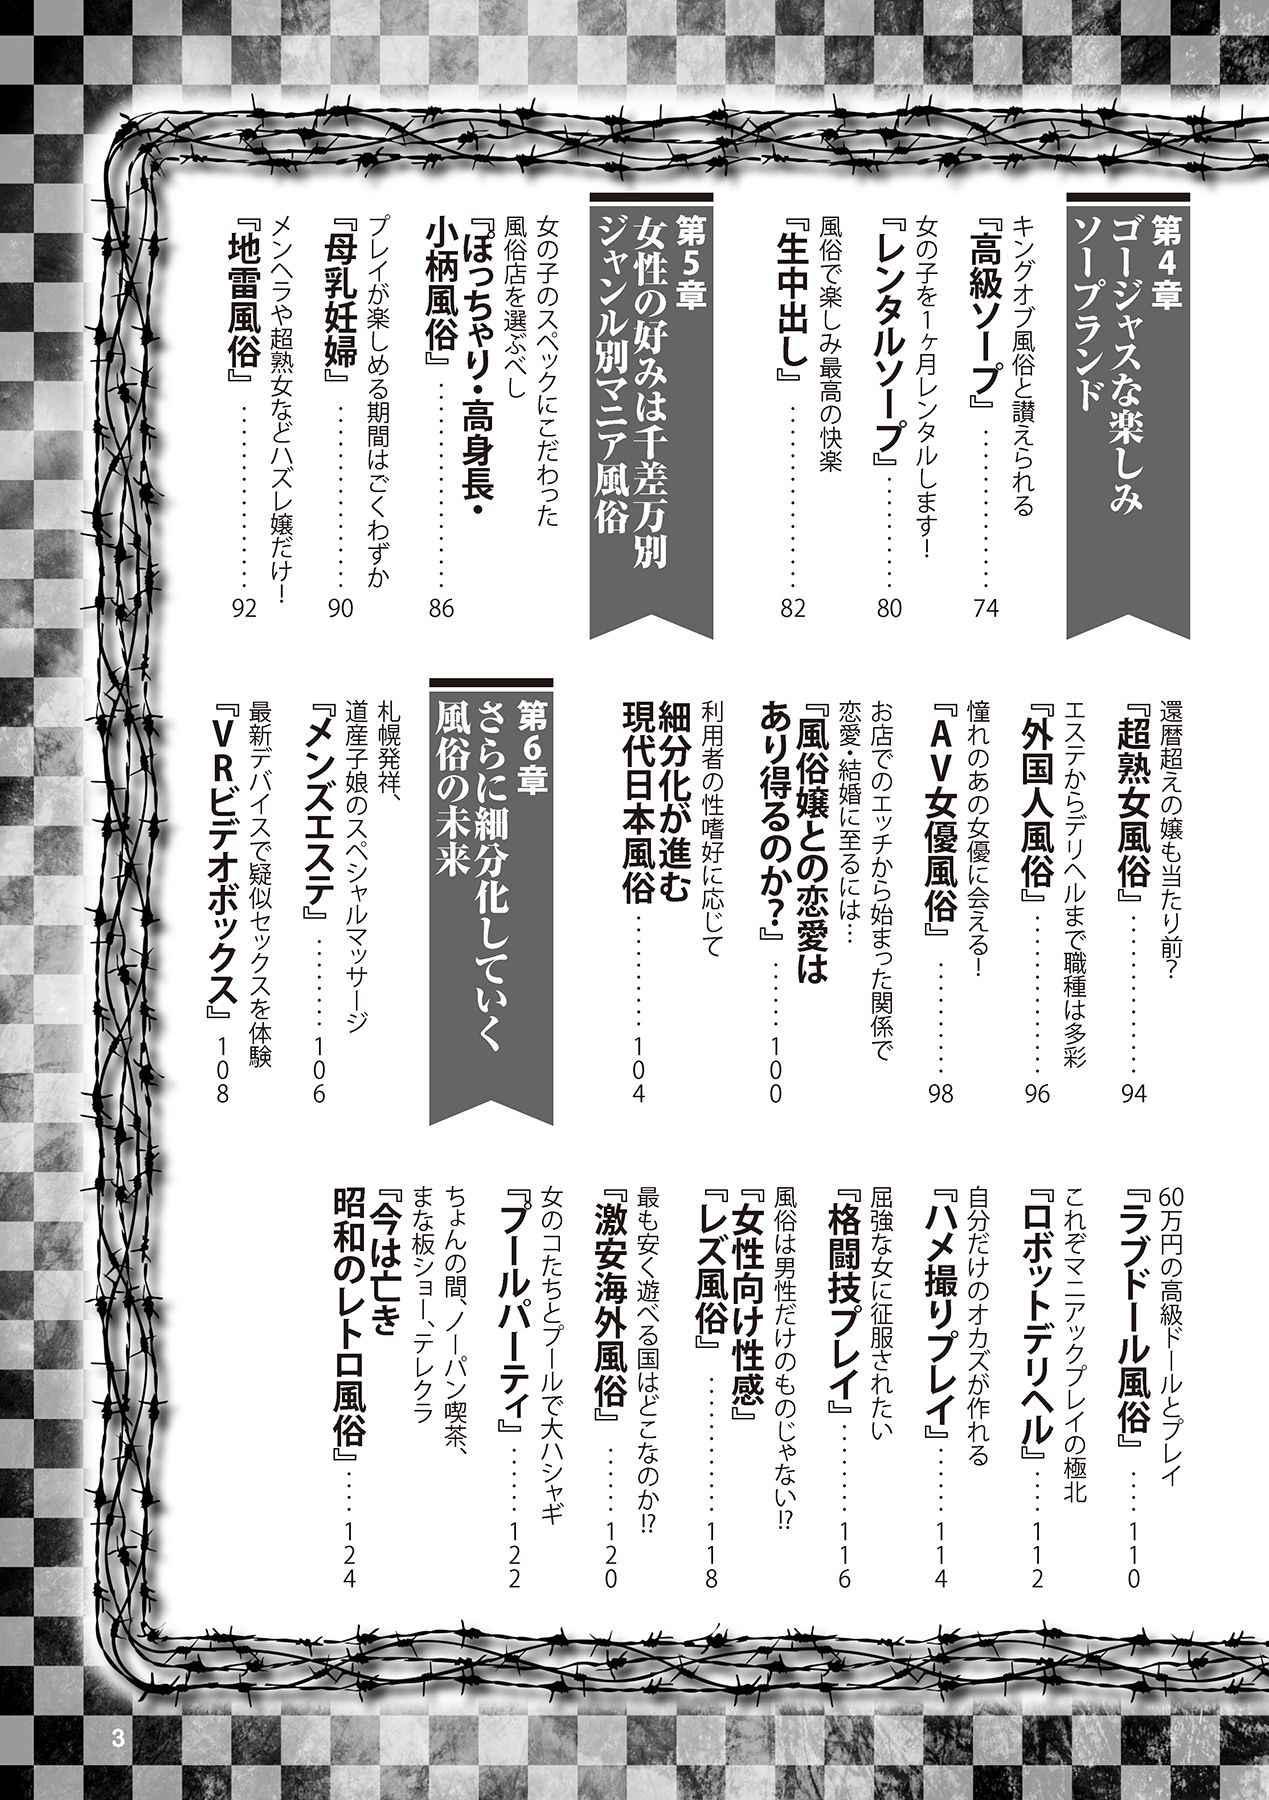 Shower アブノーマル風俗入門 ラブドール風俗から、1000万円の風俗嬢まで Sucks - Page 5